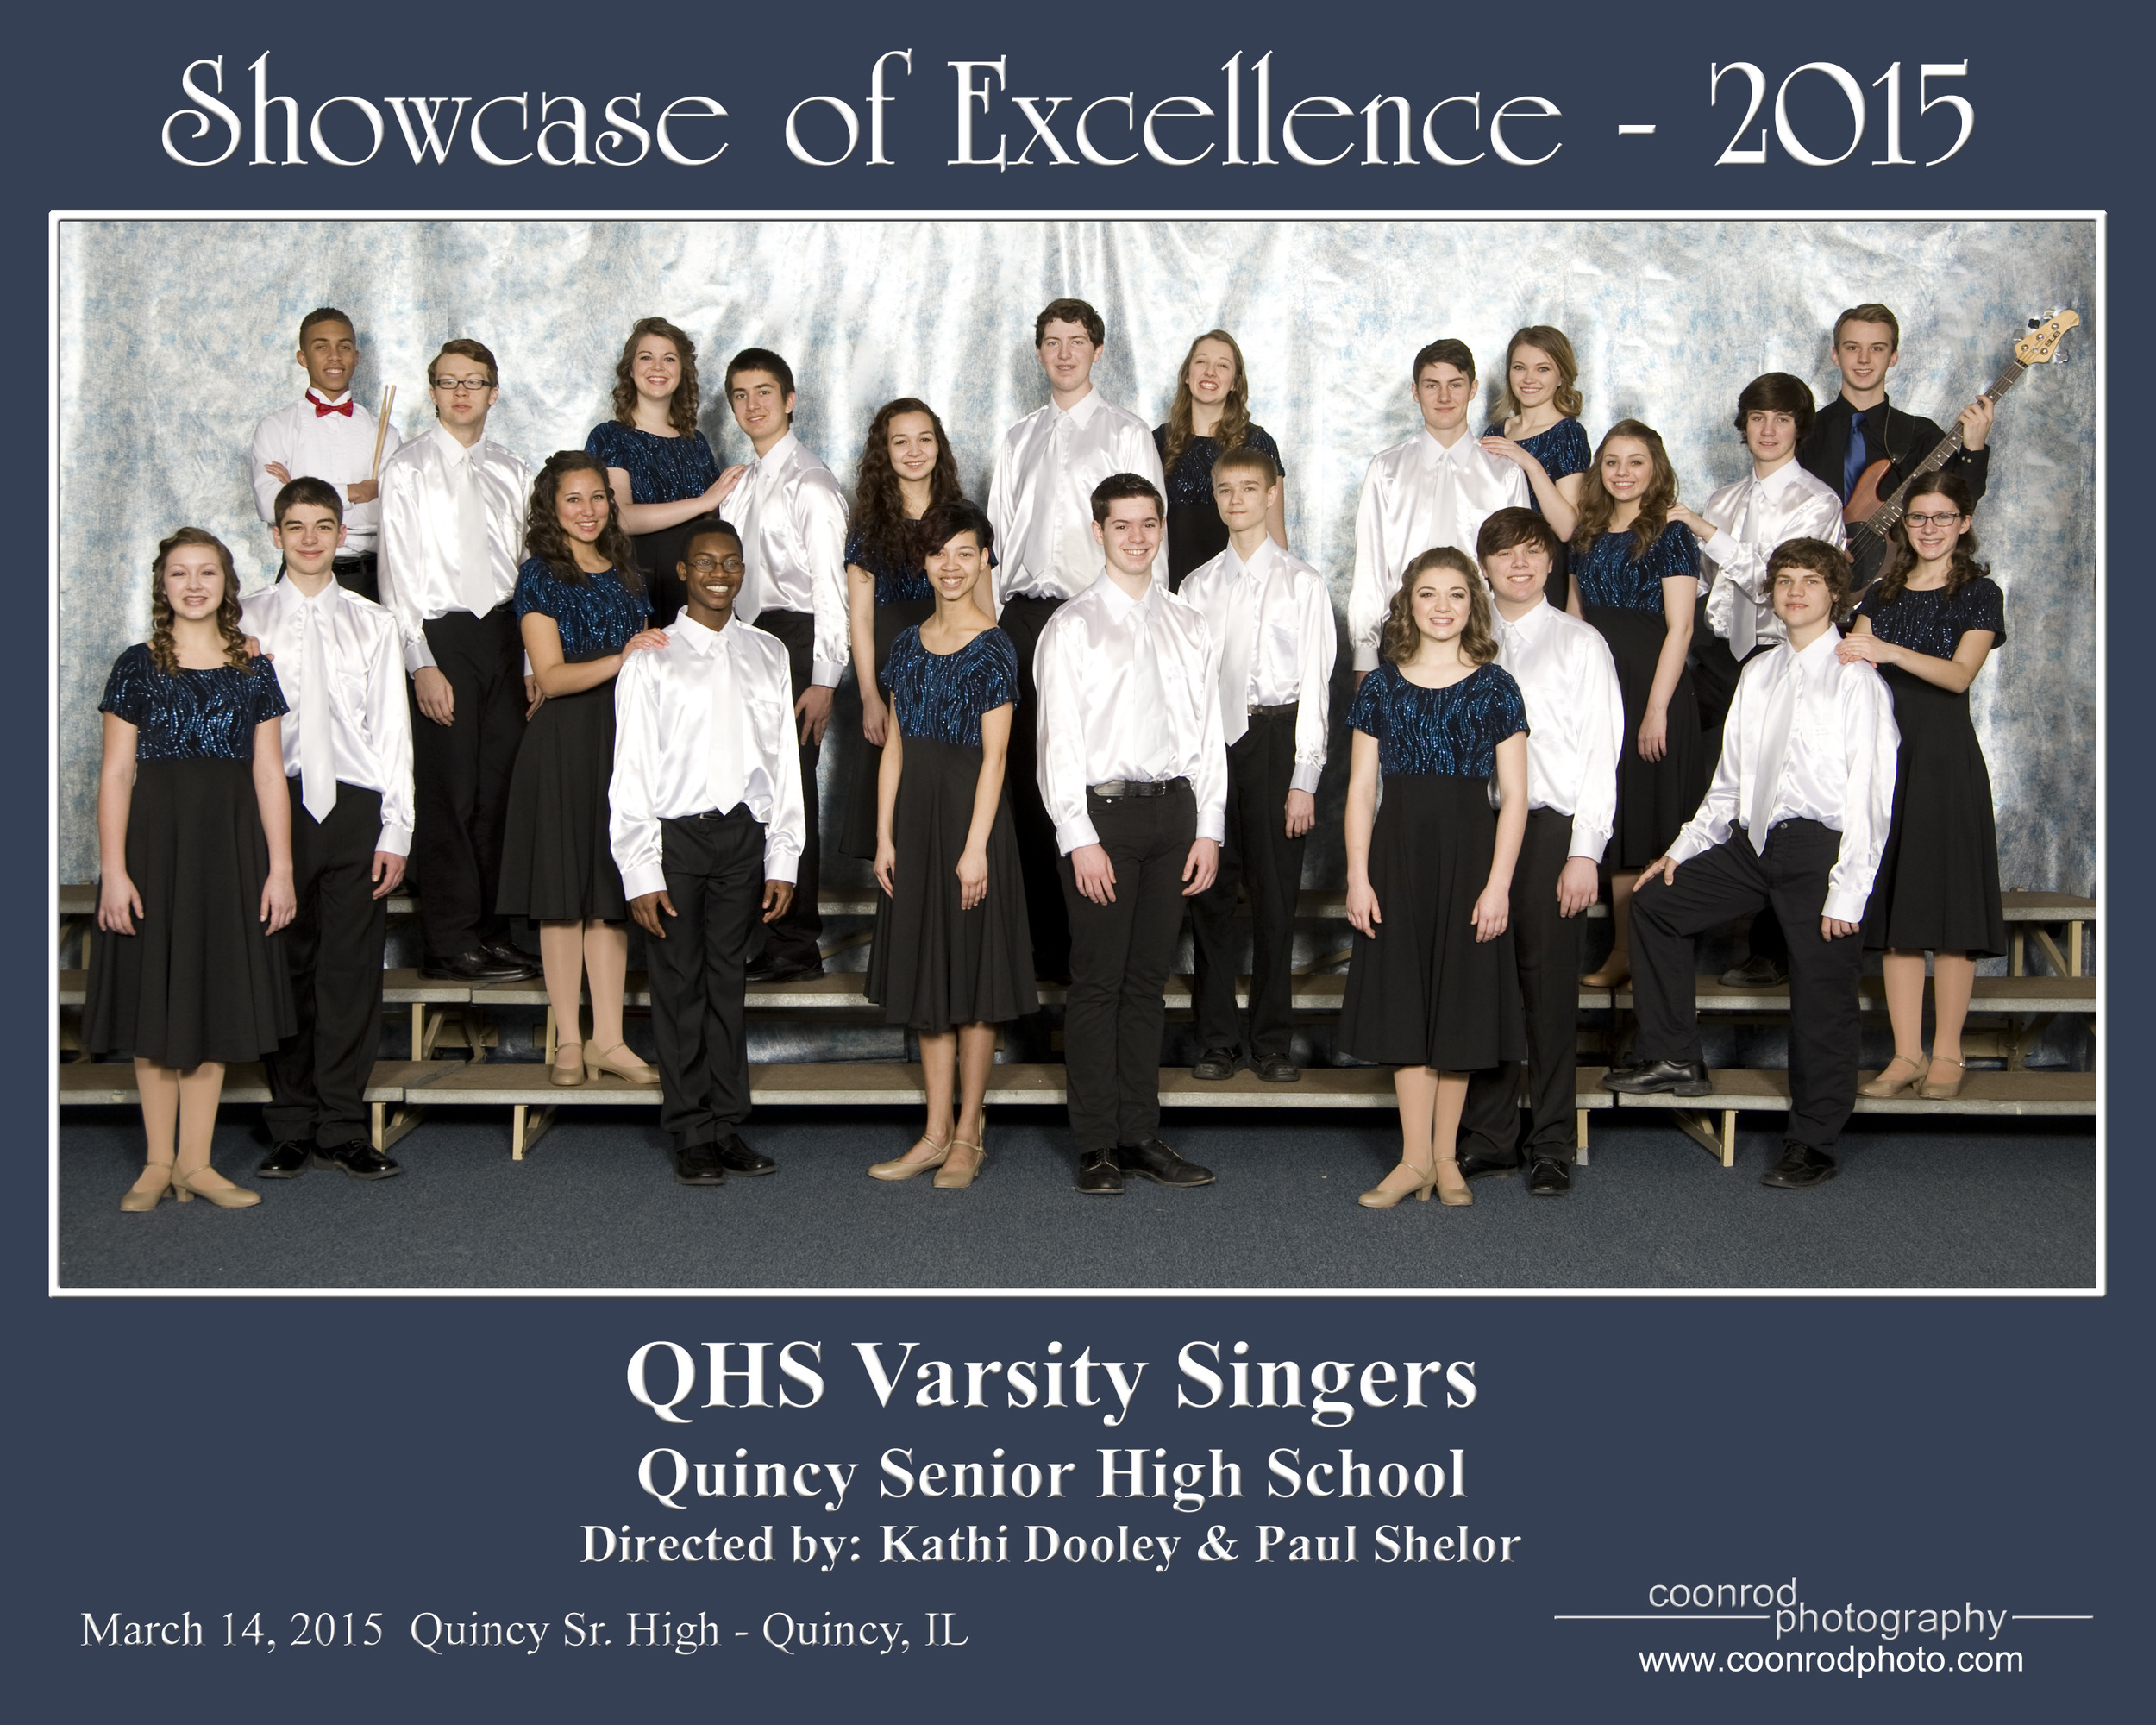 01 QHS Varsity Singers.jpg